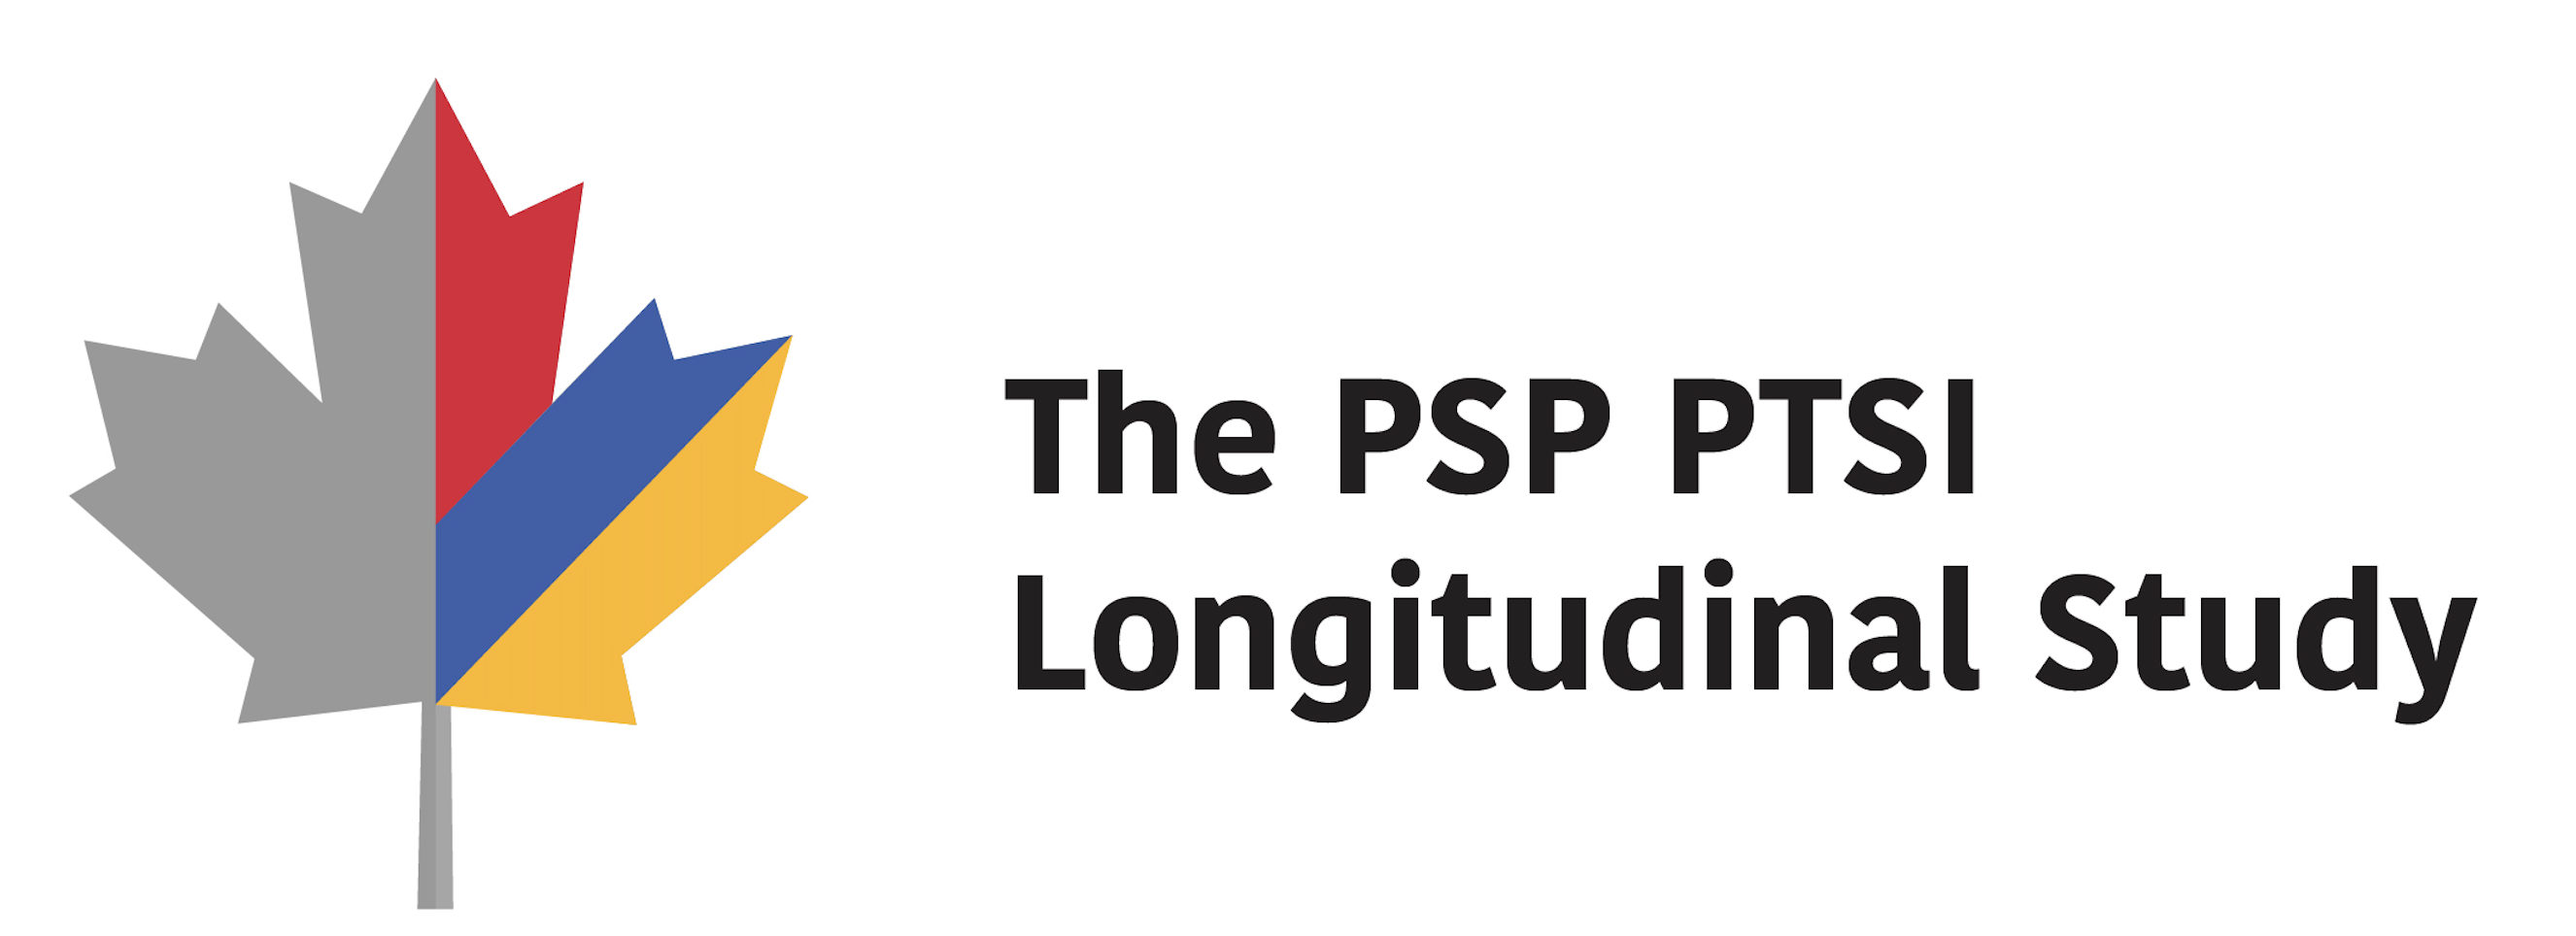 PSP-PTSI Study